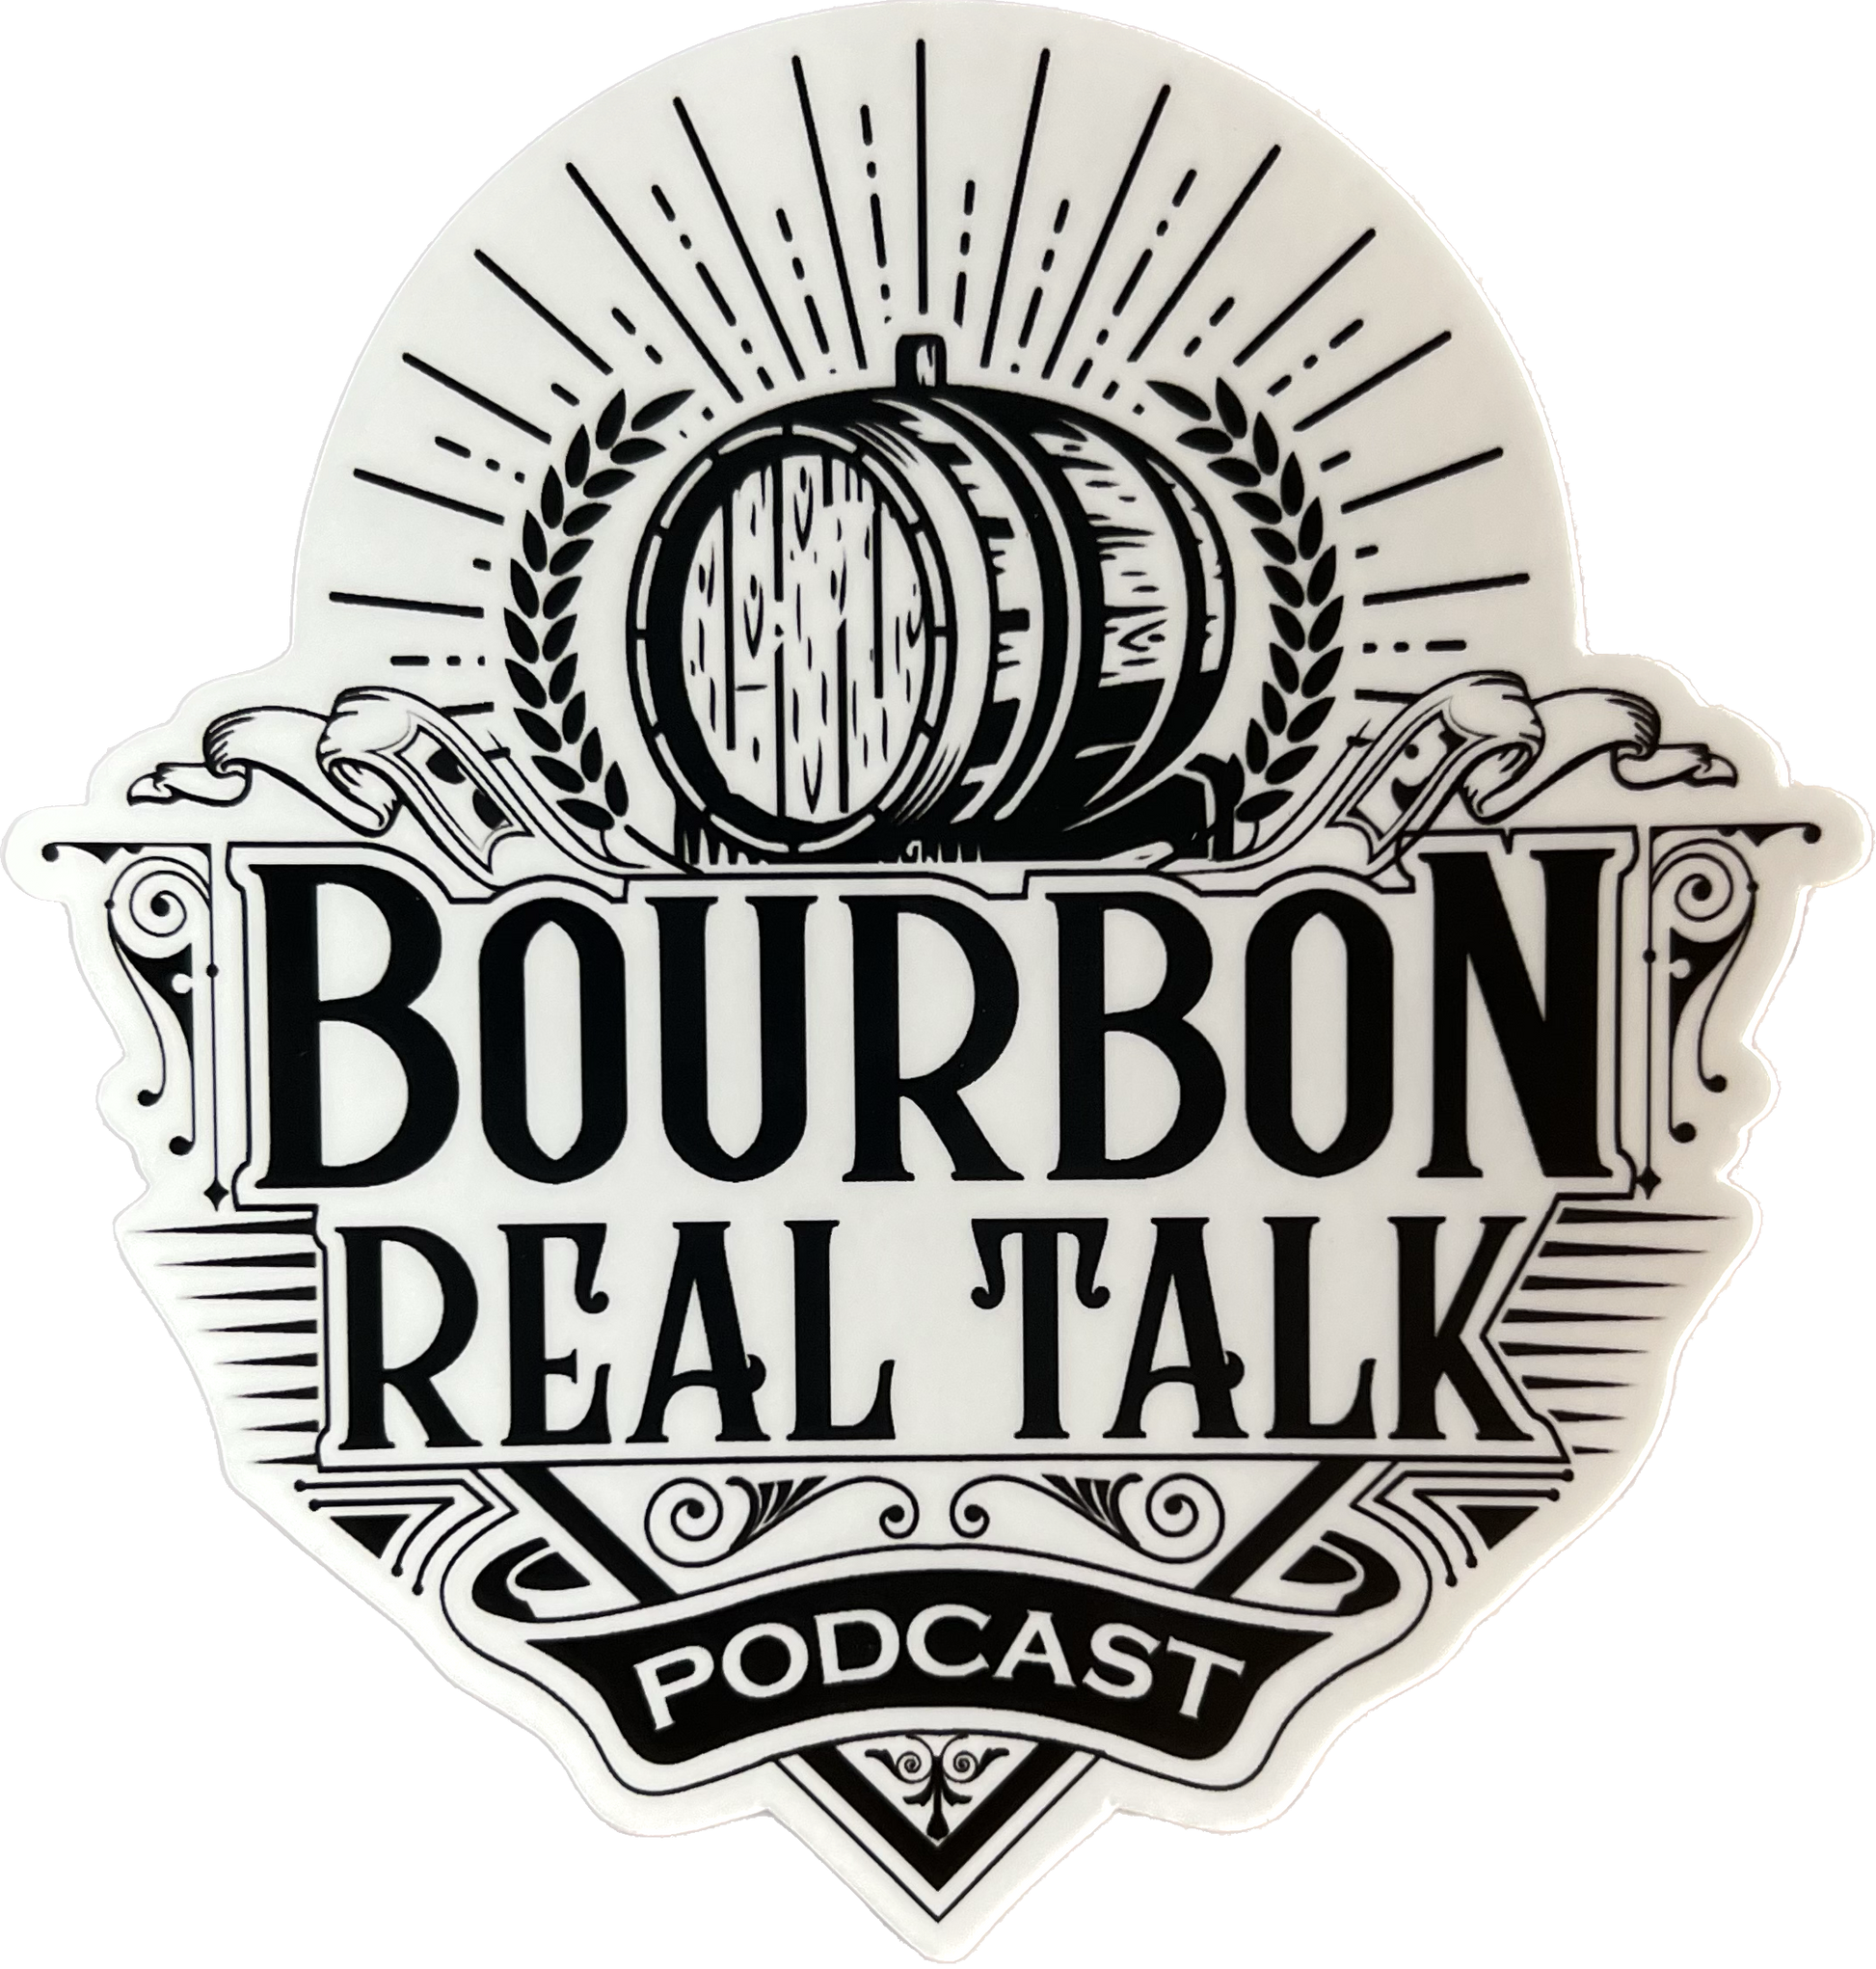 Bourbon Real Talk Podcast logo on matte vinyl